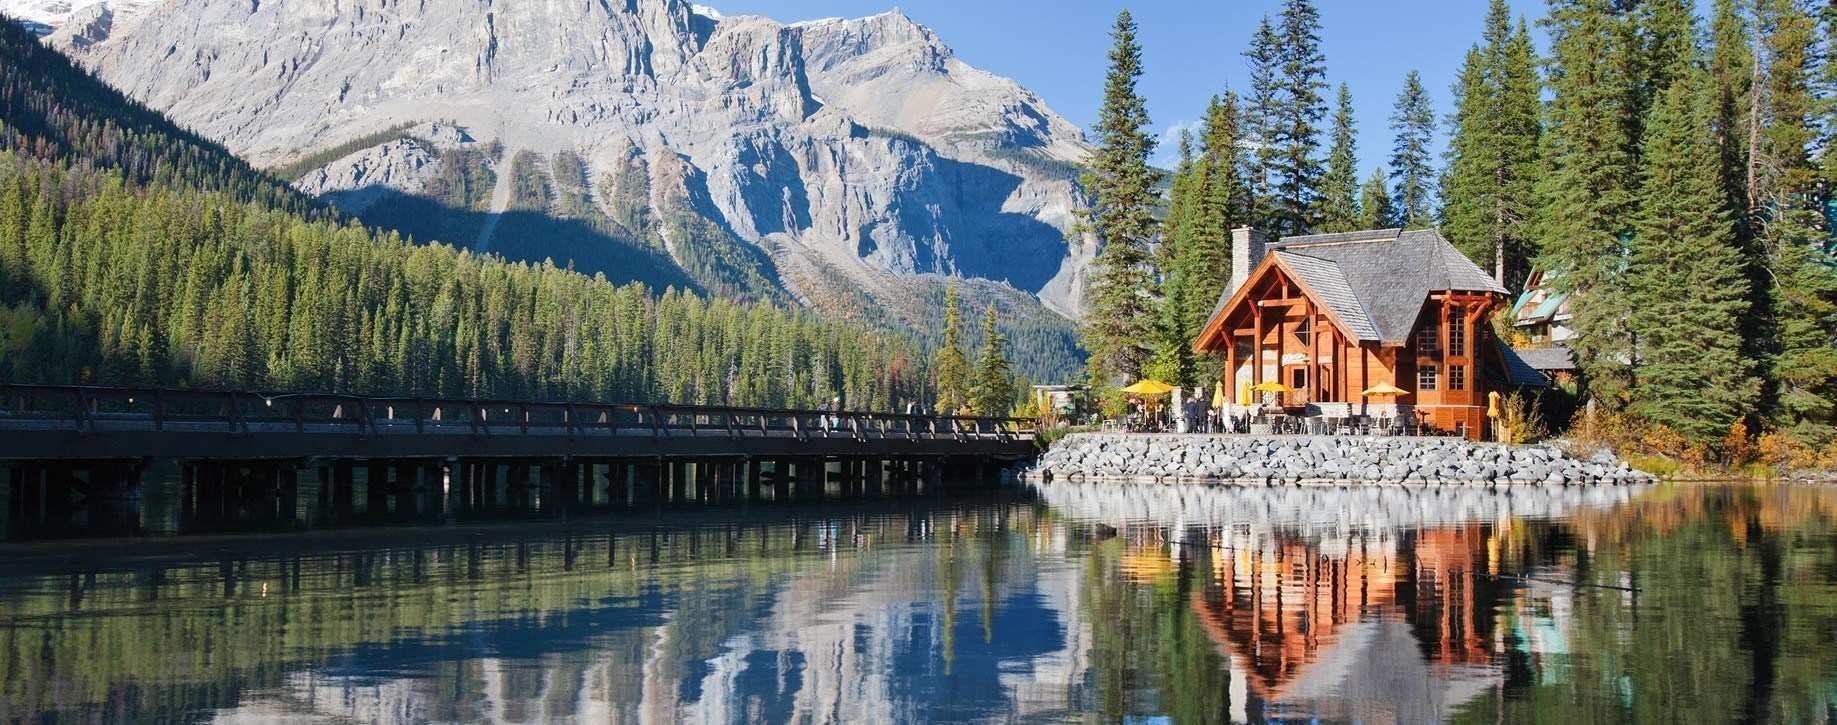 10 Beautiful Resorts on North American Lakes | Lake resort 